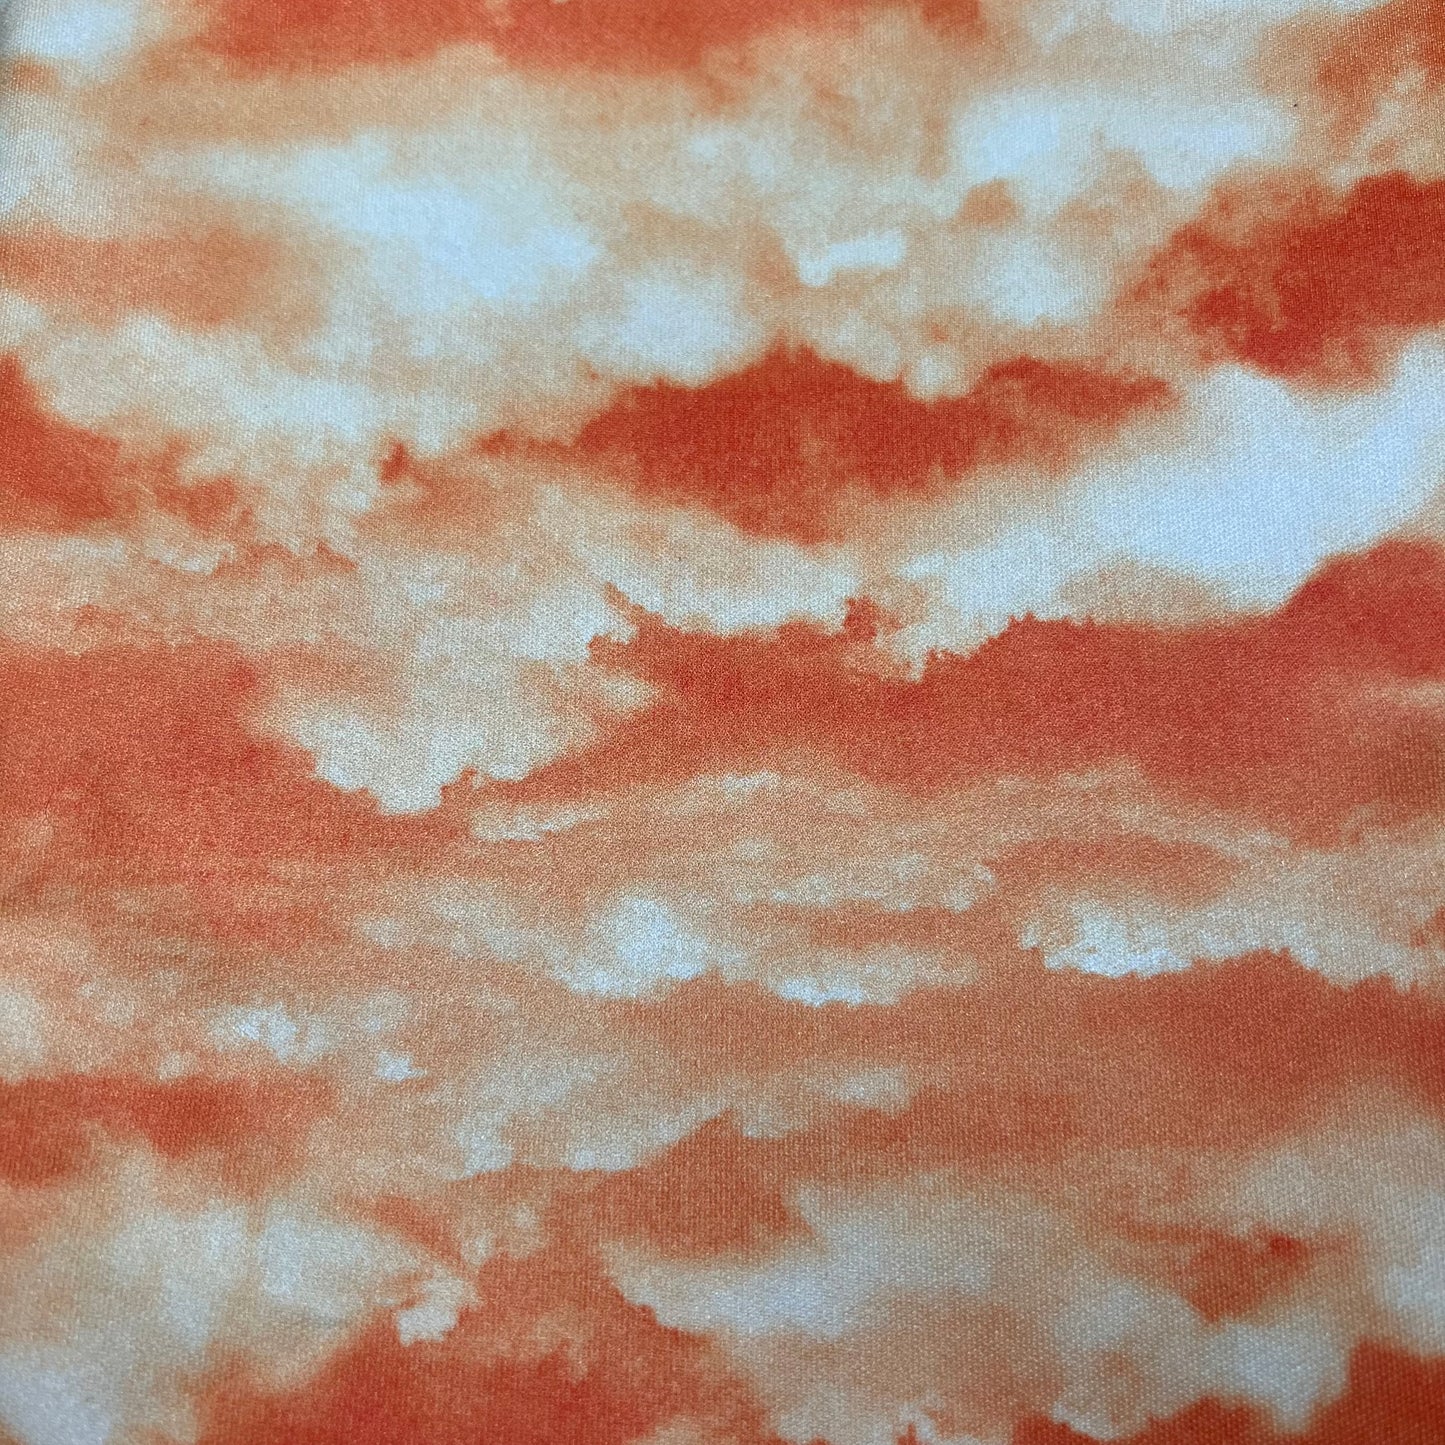 Orange Clouds